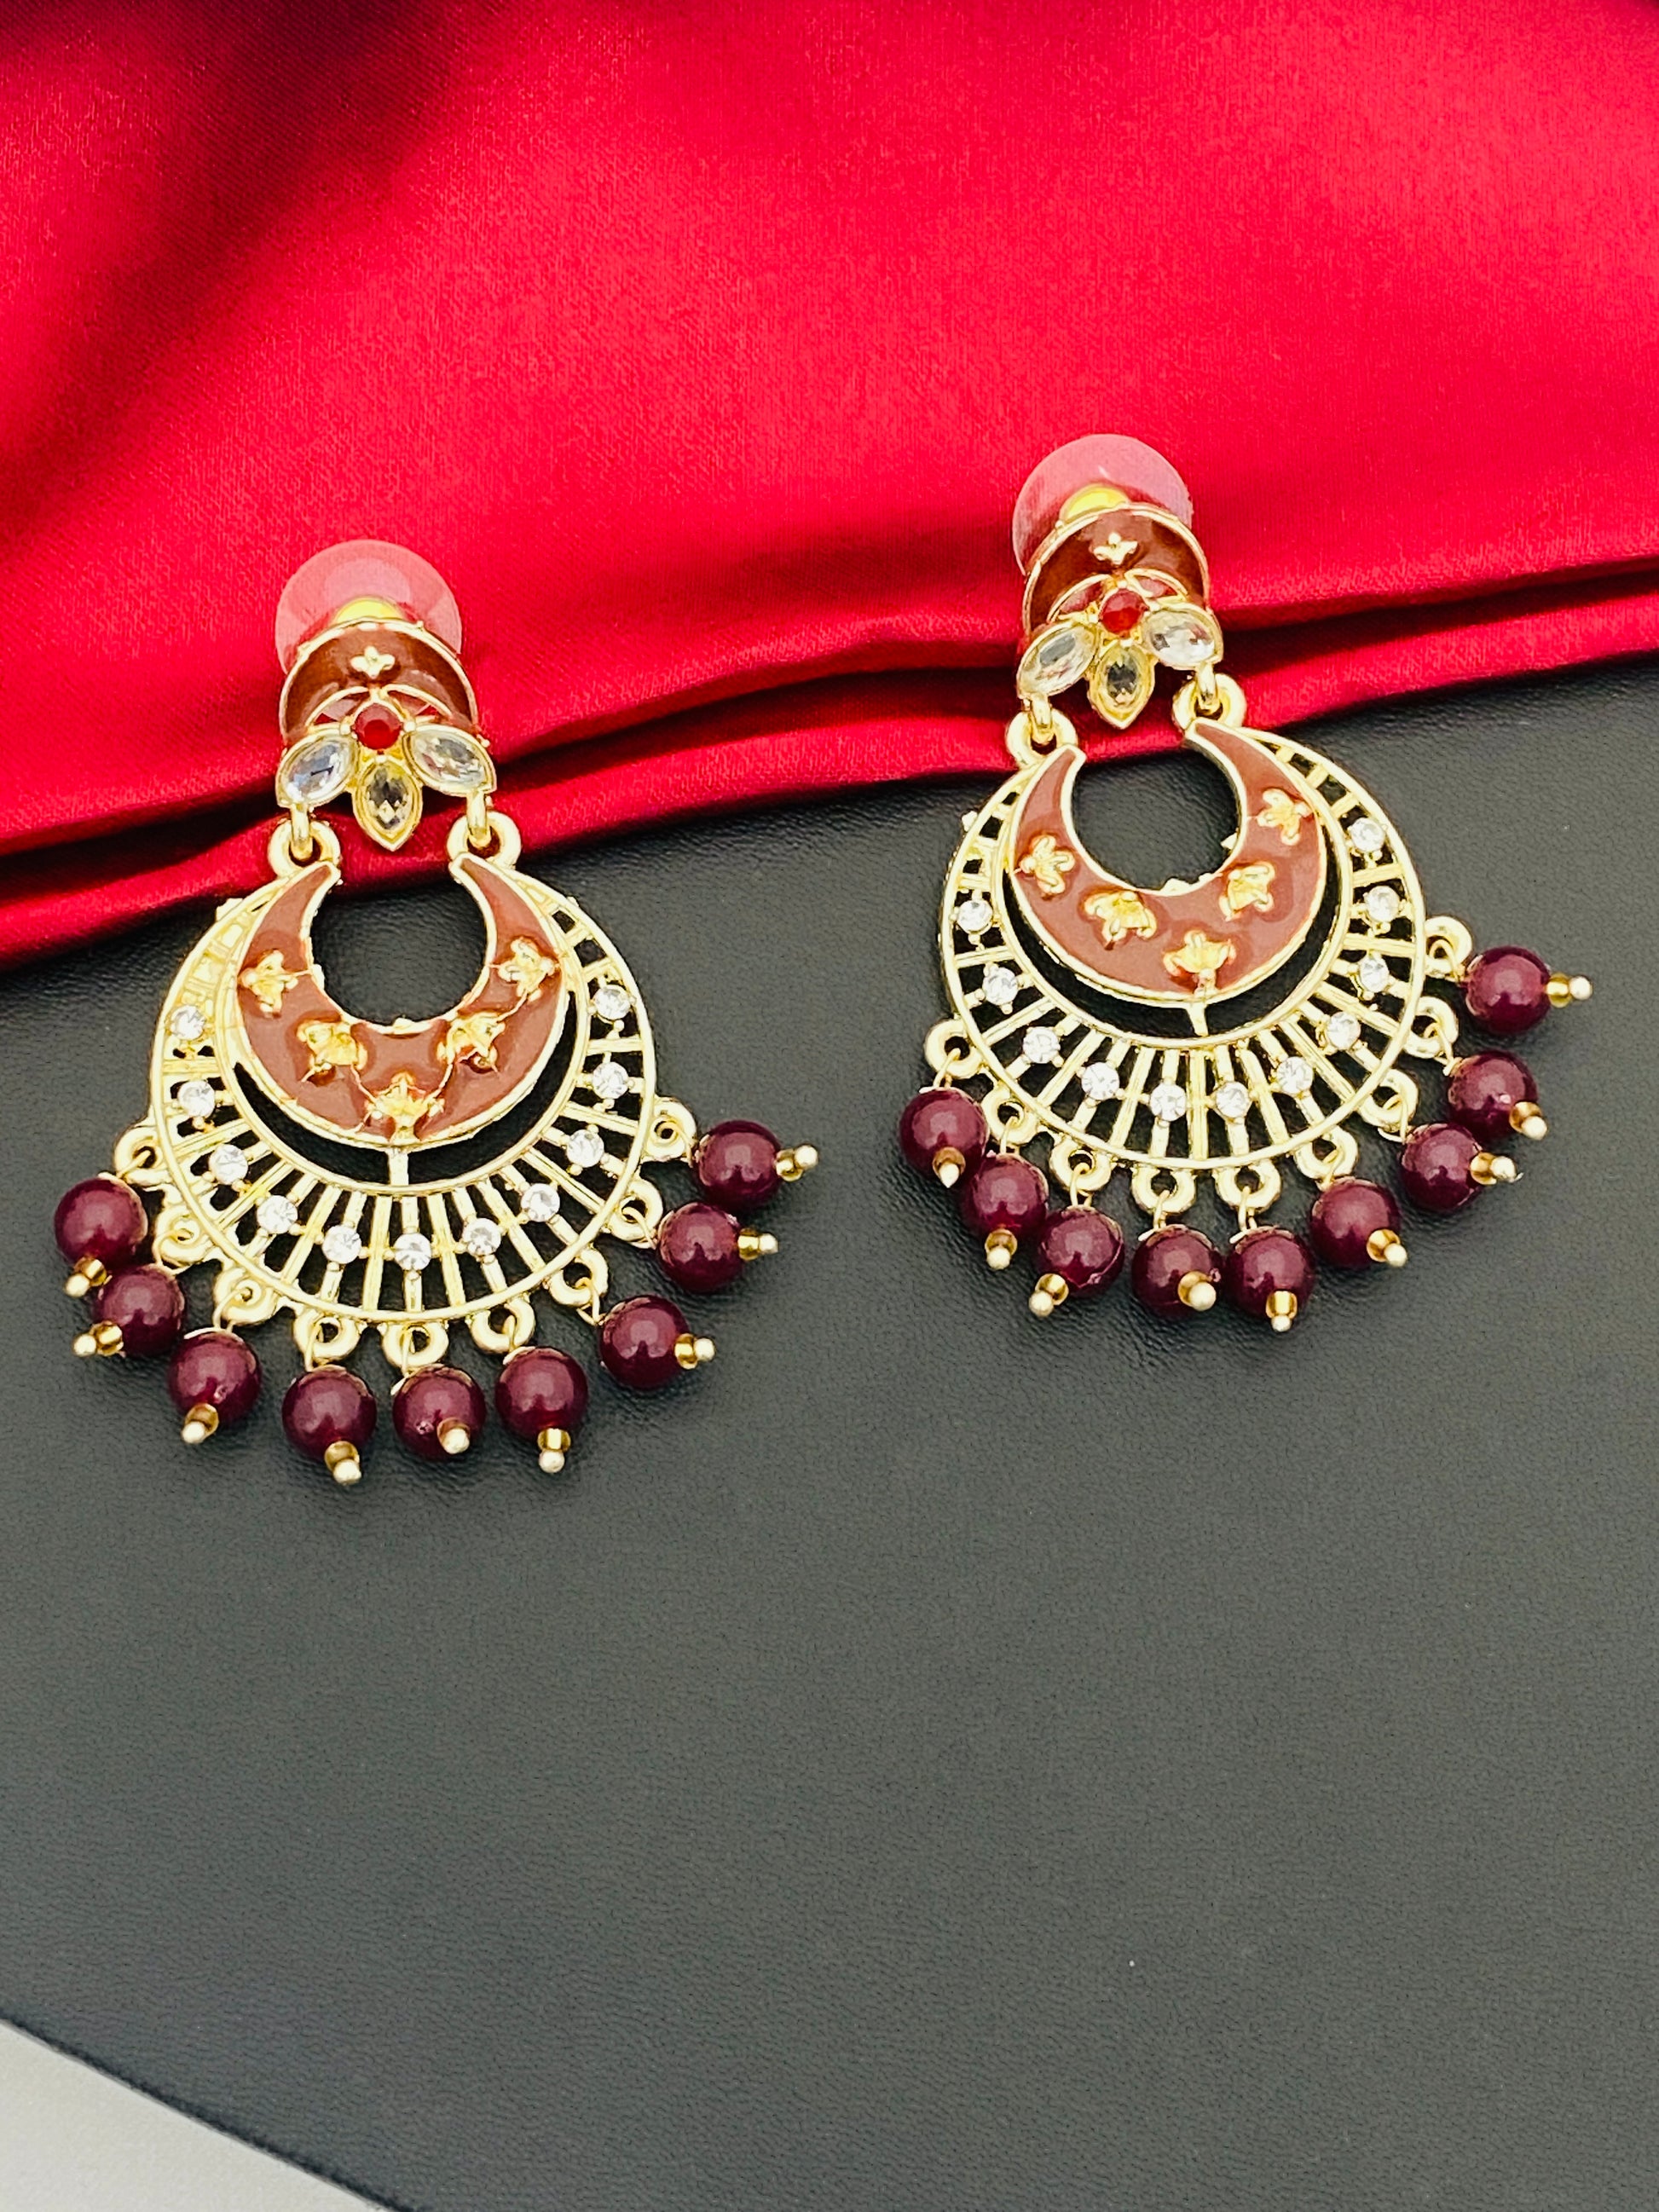 Antique Gold Earrings For Women in Chandler